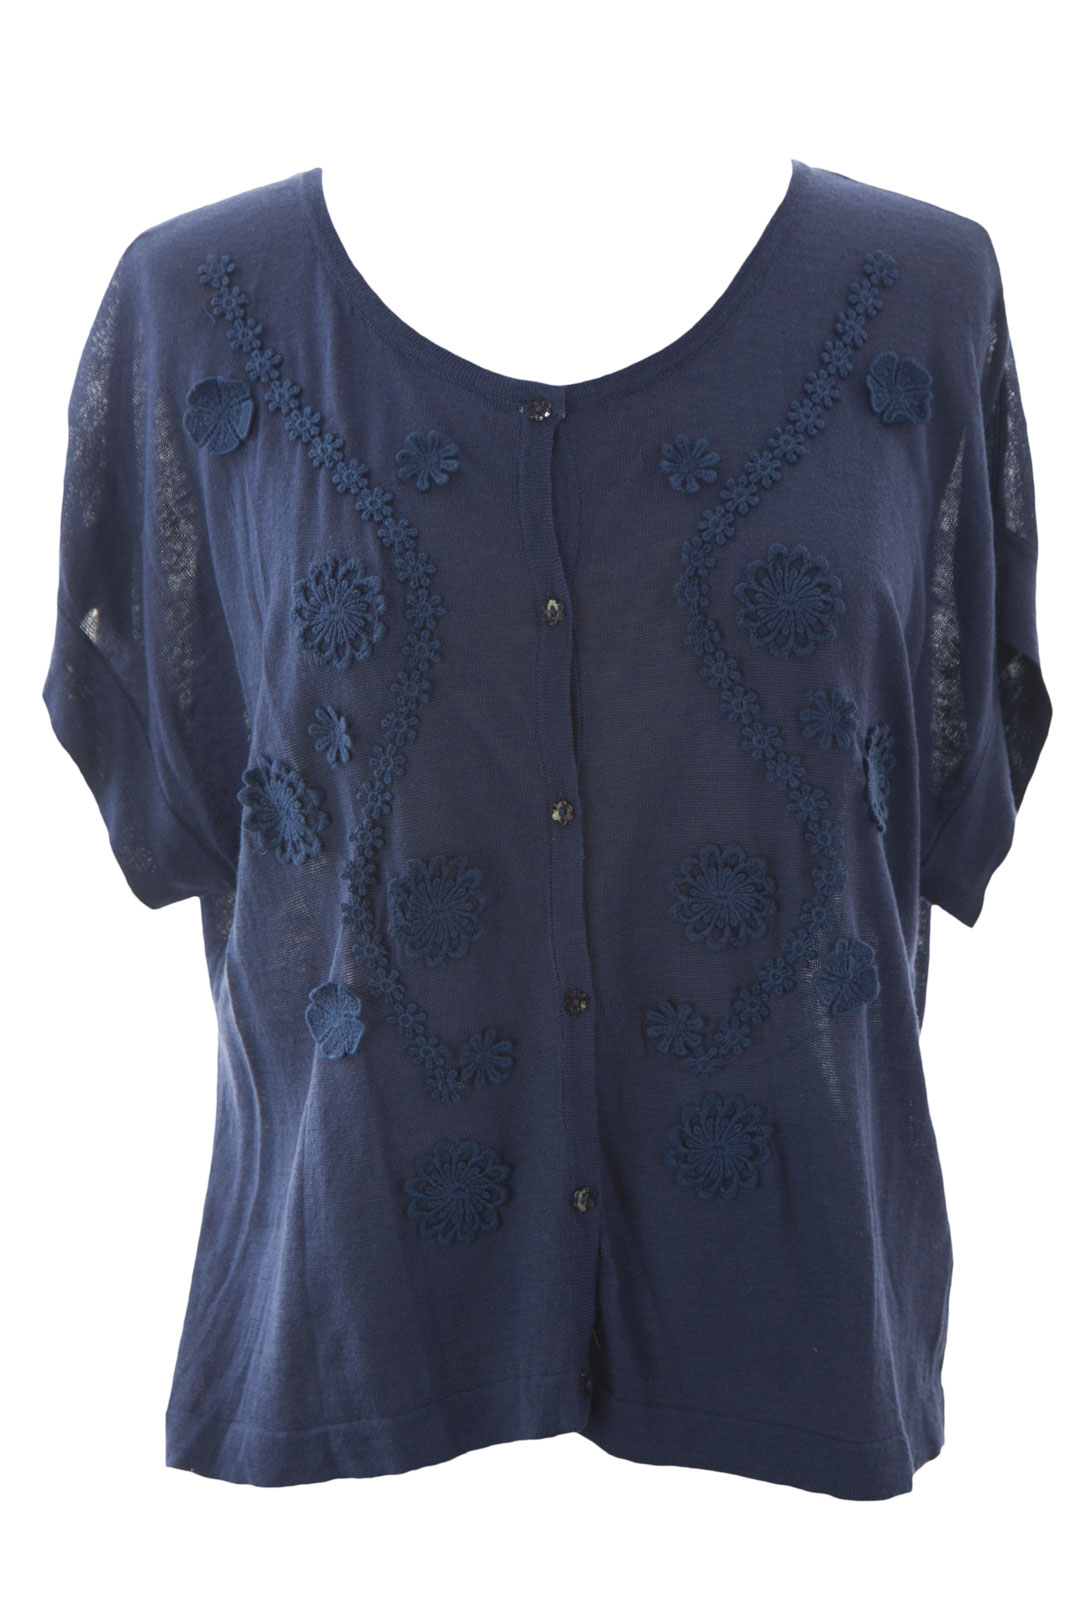 August Silk Women's Floral Knit Short Sleeve Cardigan NWT $68 | eBay